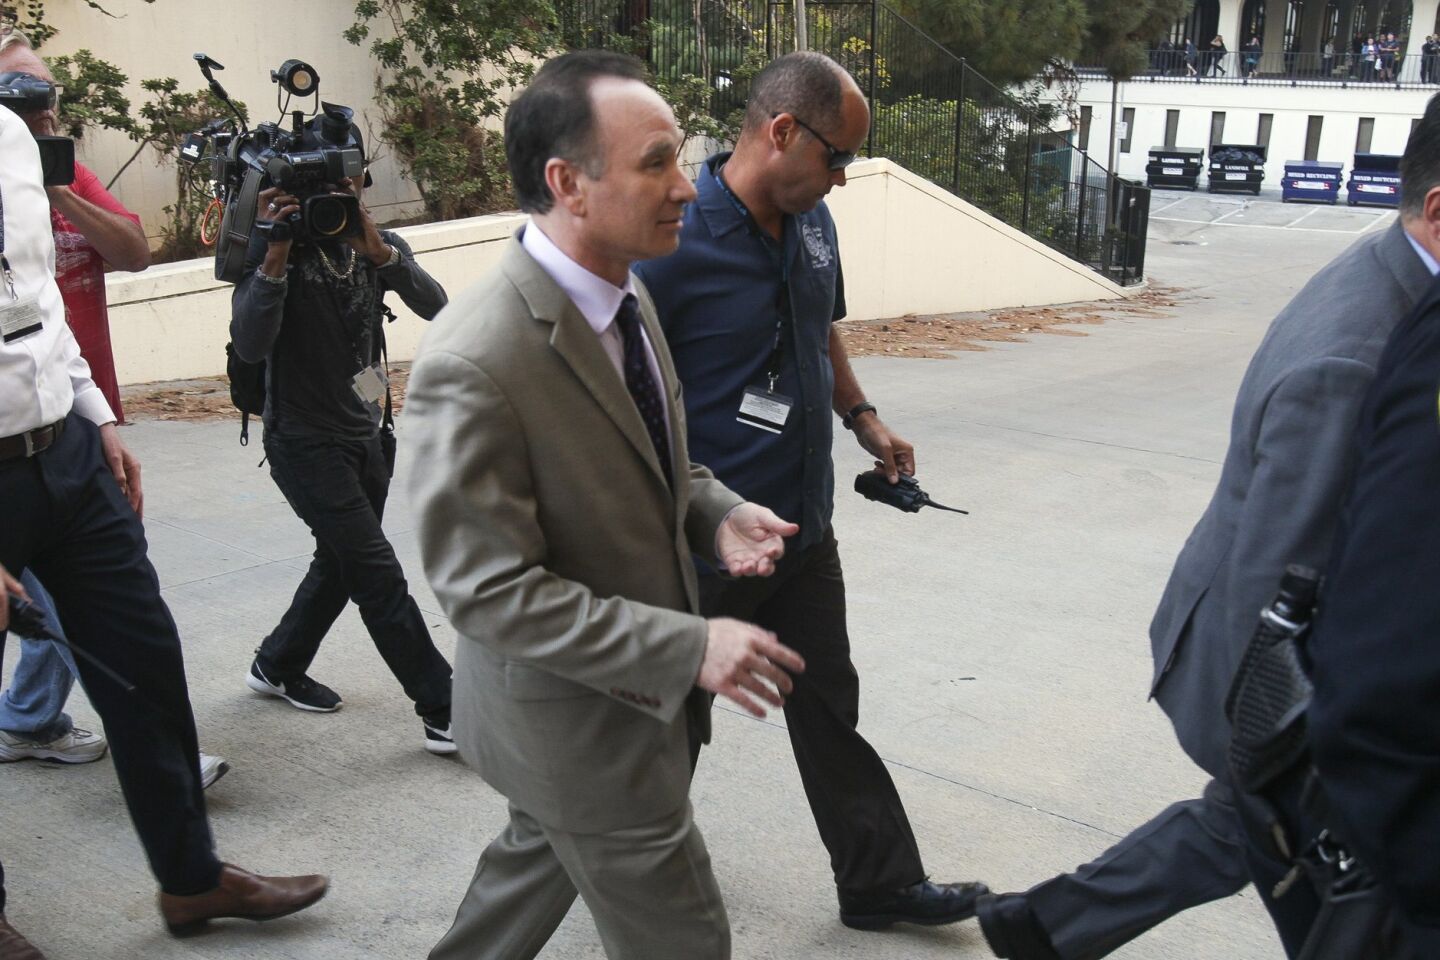 San Diego State president Elliot Hirshman, front center, is escorted away.